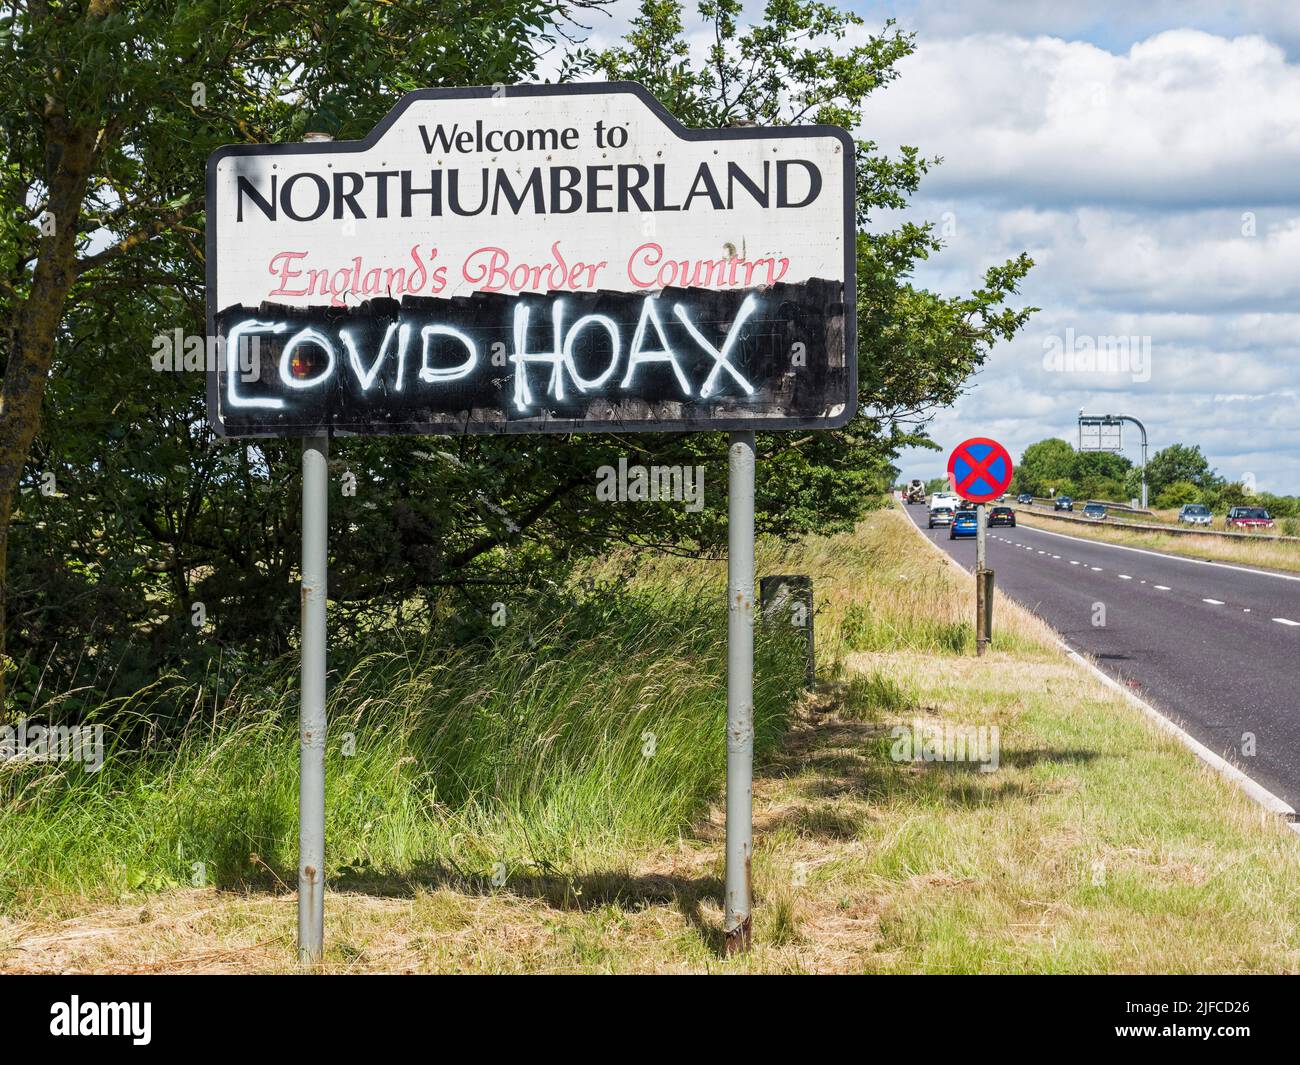 Covid hoax graffiti on a UK road sign. Stock Photo